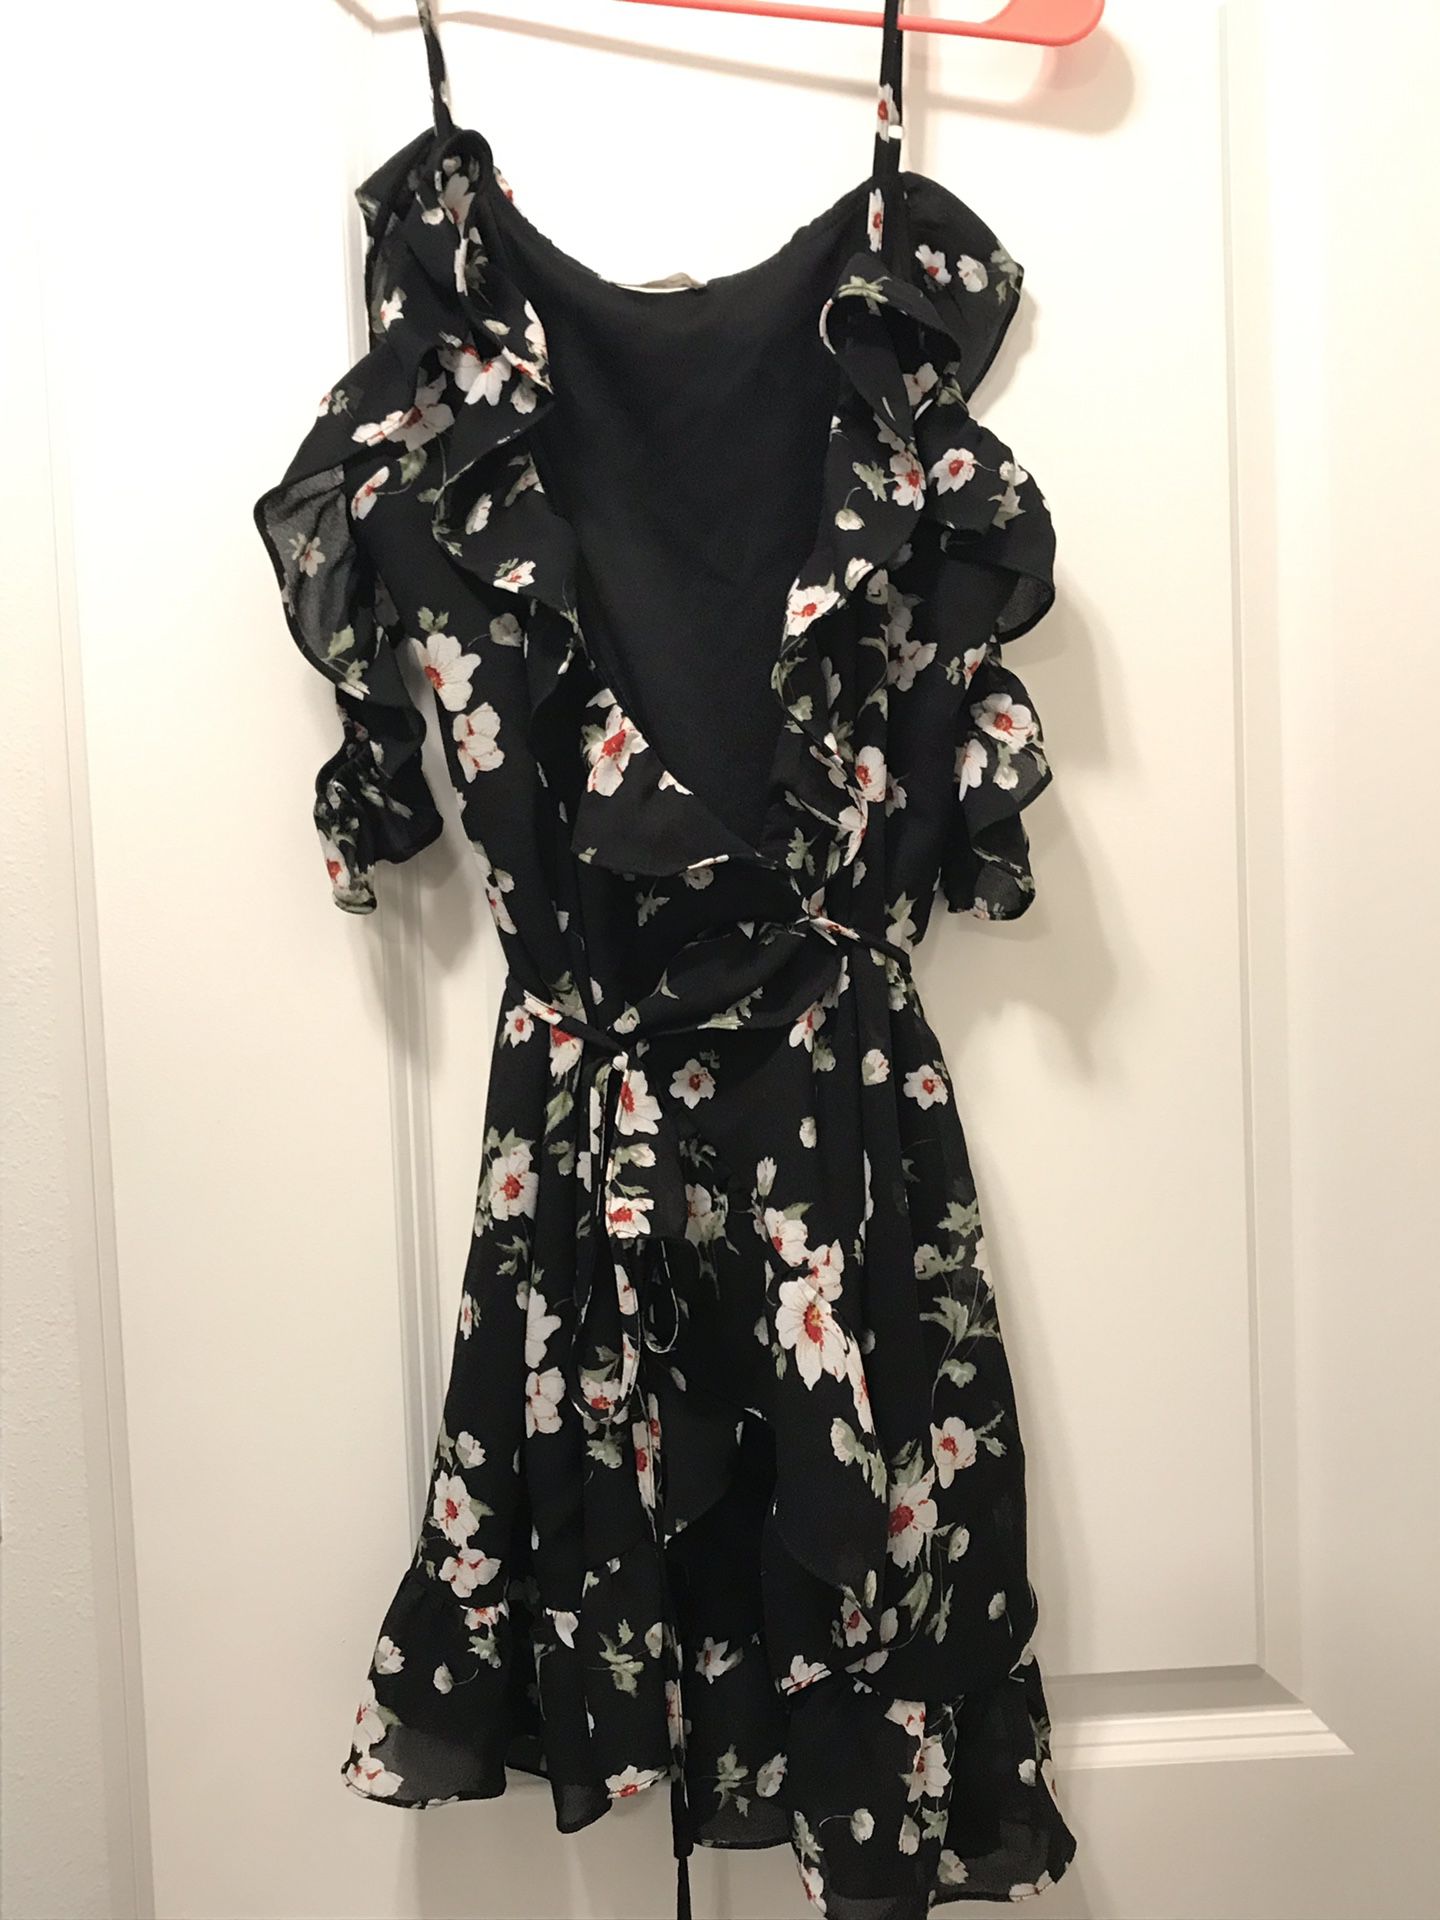 Floral Ruffle Black Dress - Medium